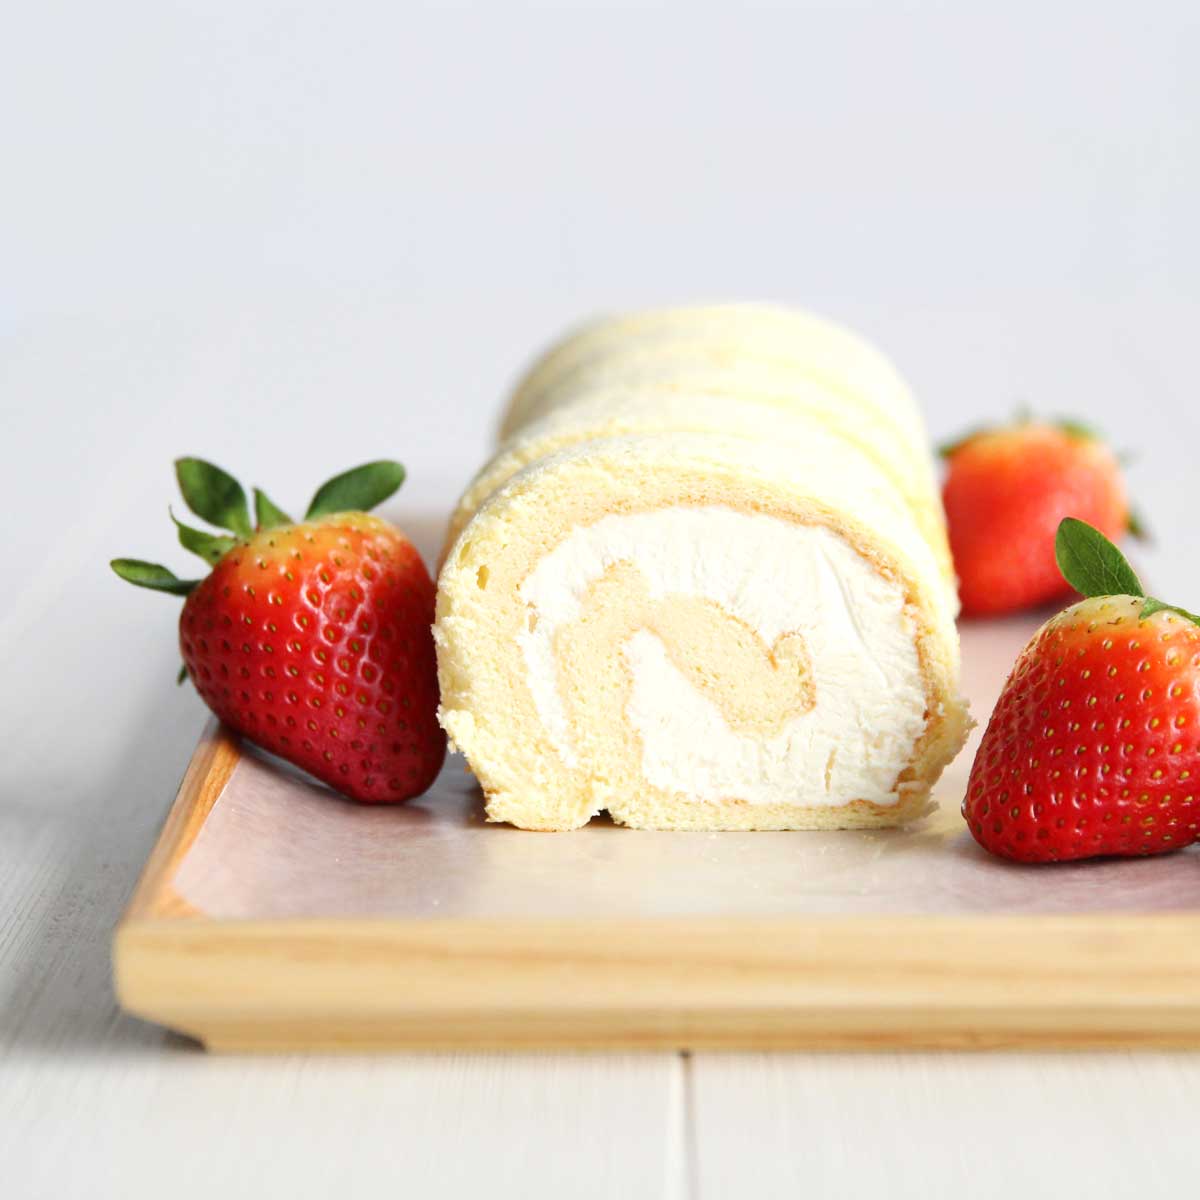 Unbelievably Soft Flourless Vanilla Swiss Roll Cake (Gluten-Free) - Flourless Vanilla Swiss Roll Cake